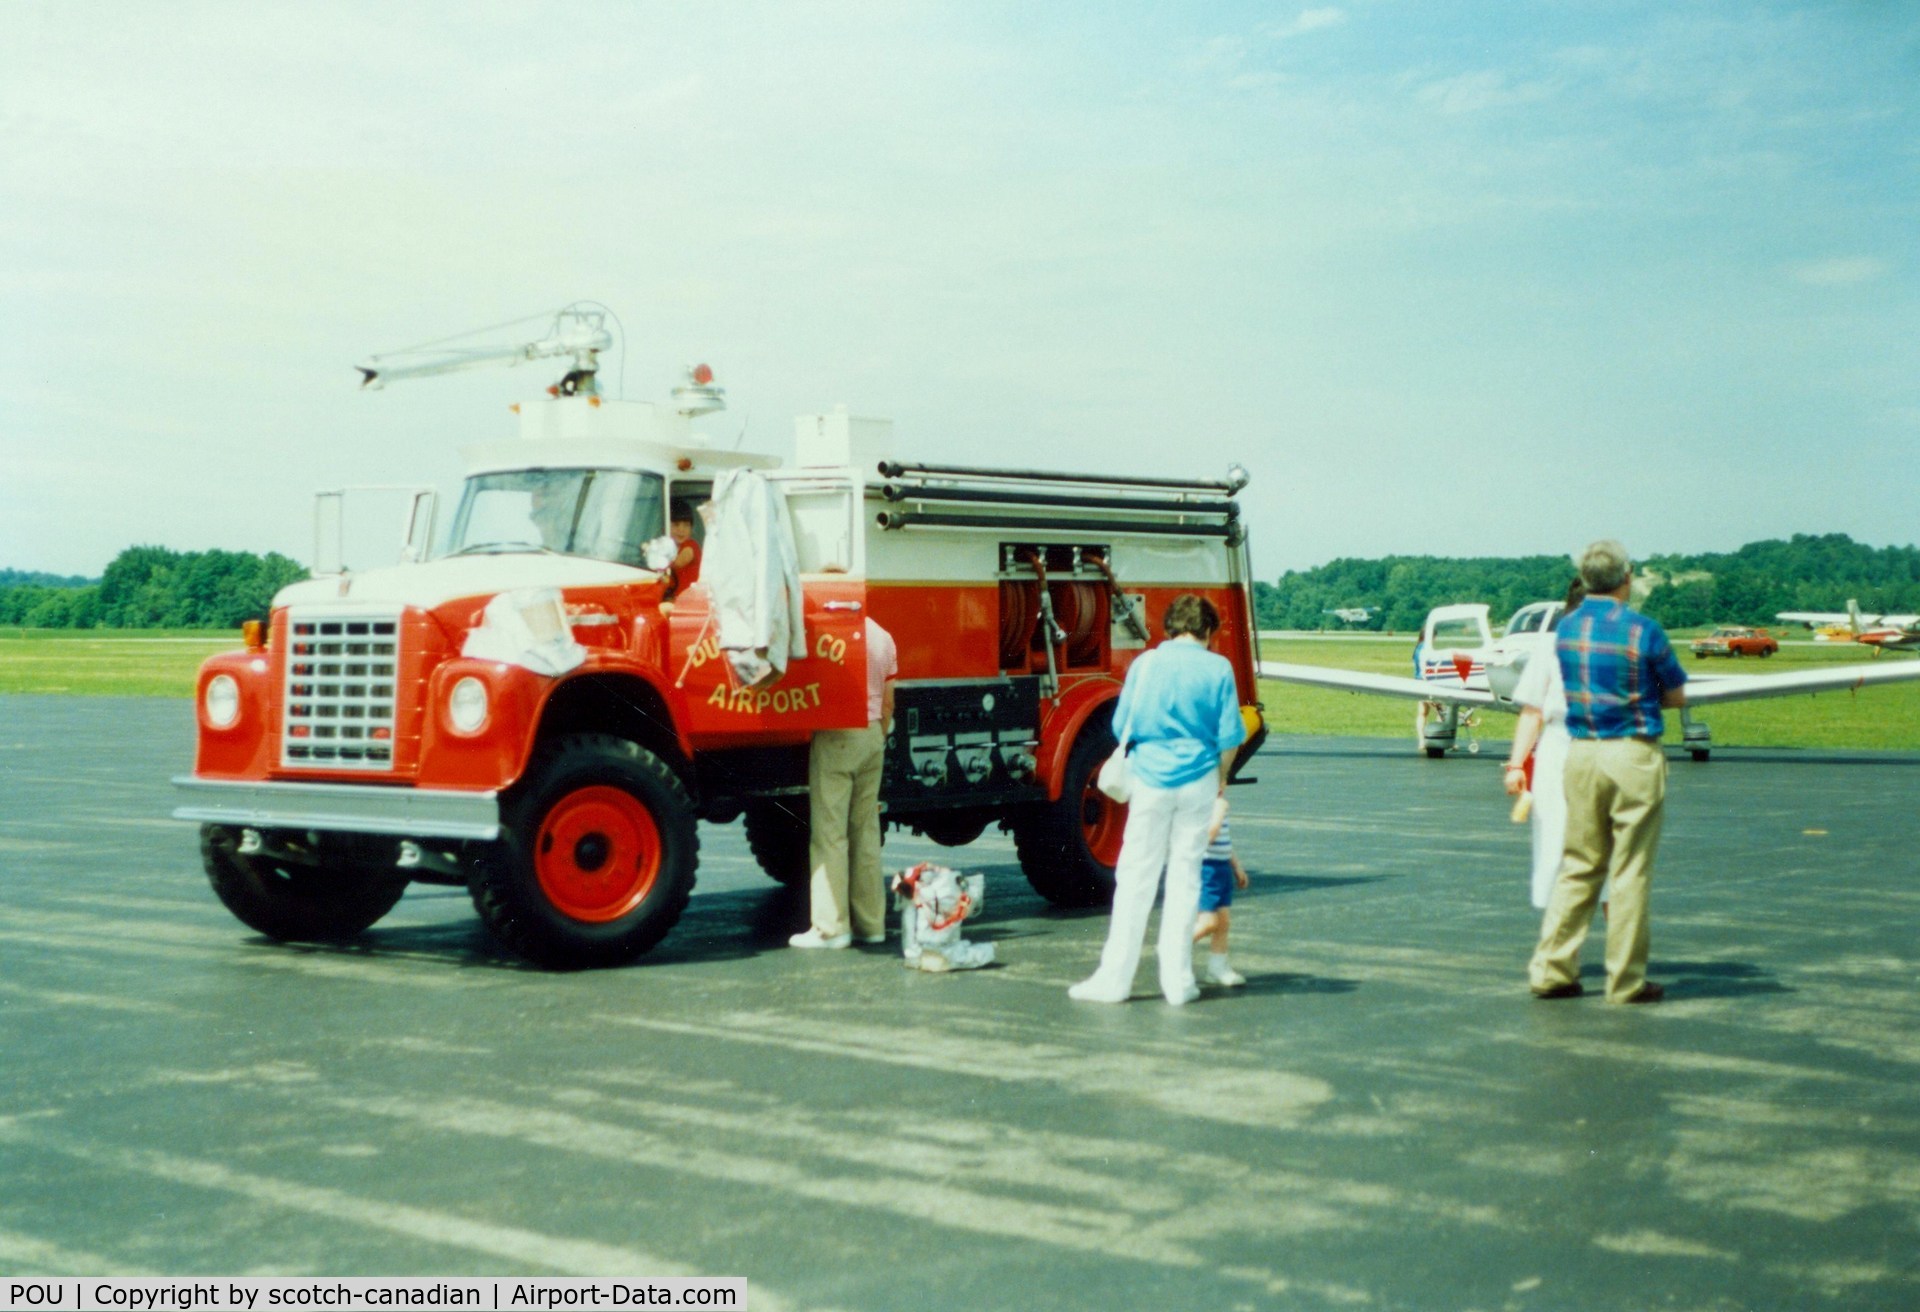 Dutchess County Airport (POU) - Dutchess County Airport Fire Truck at Poughkeepsie, NY - circa 1980's